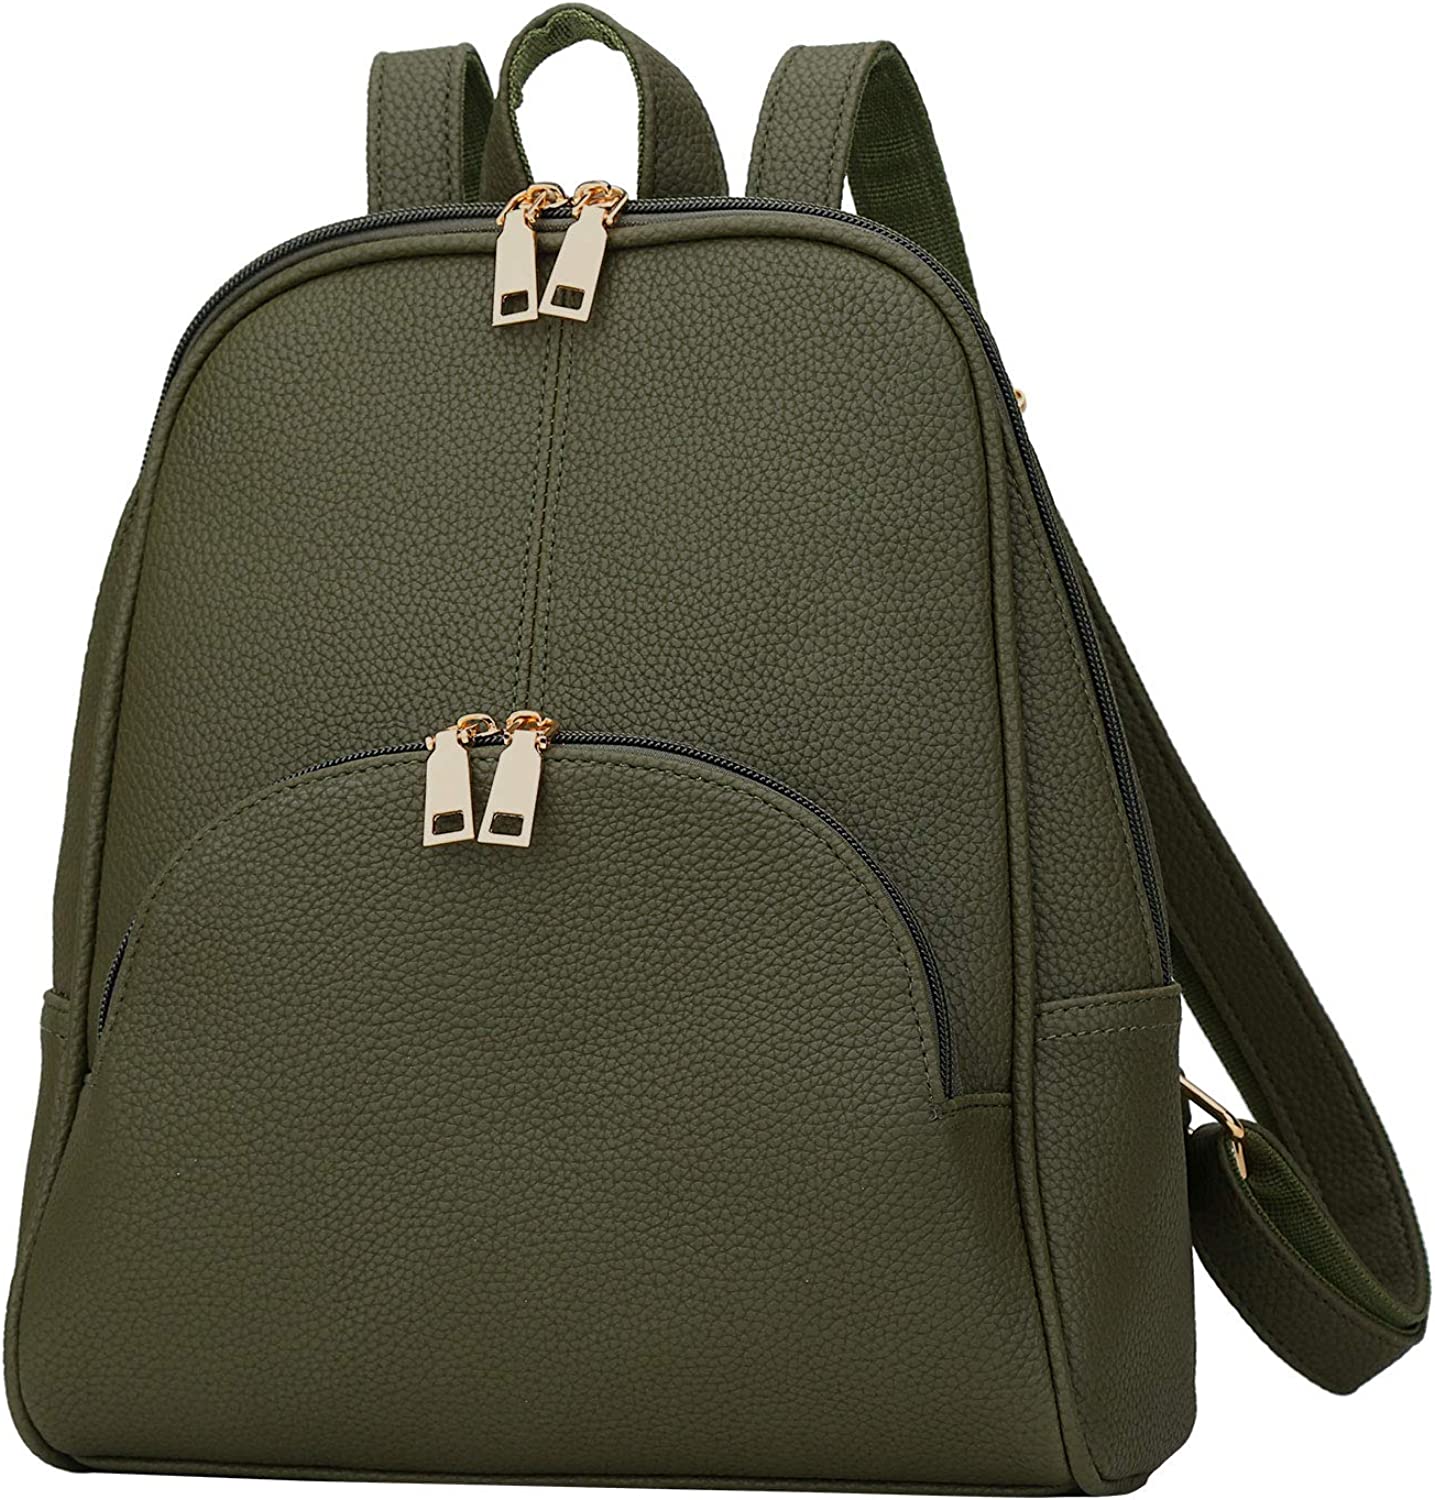 KKXIU Women Small Backpack Purse Convertible Leather Mini Daypacks Crossbody Shoulder Bag For Girls 